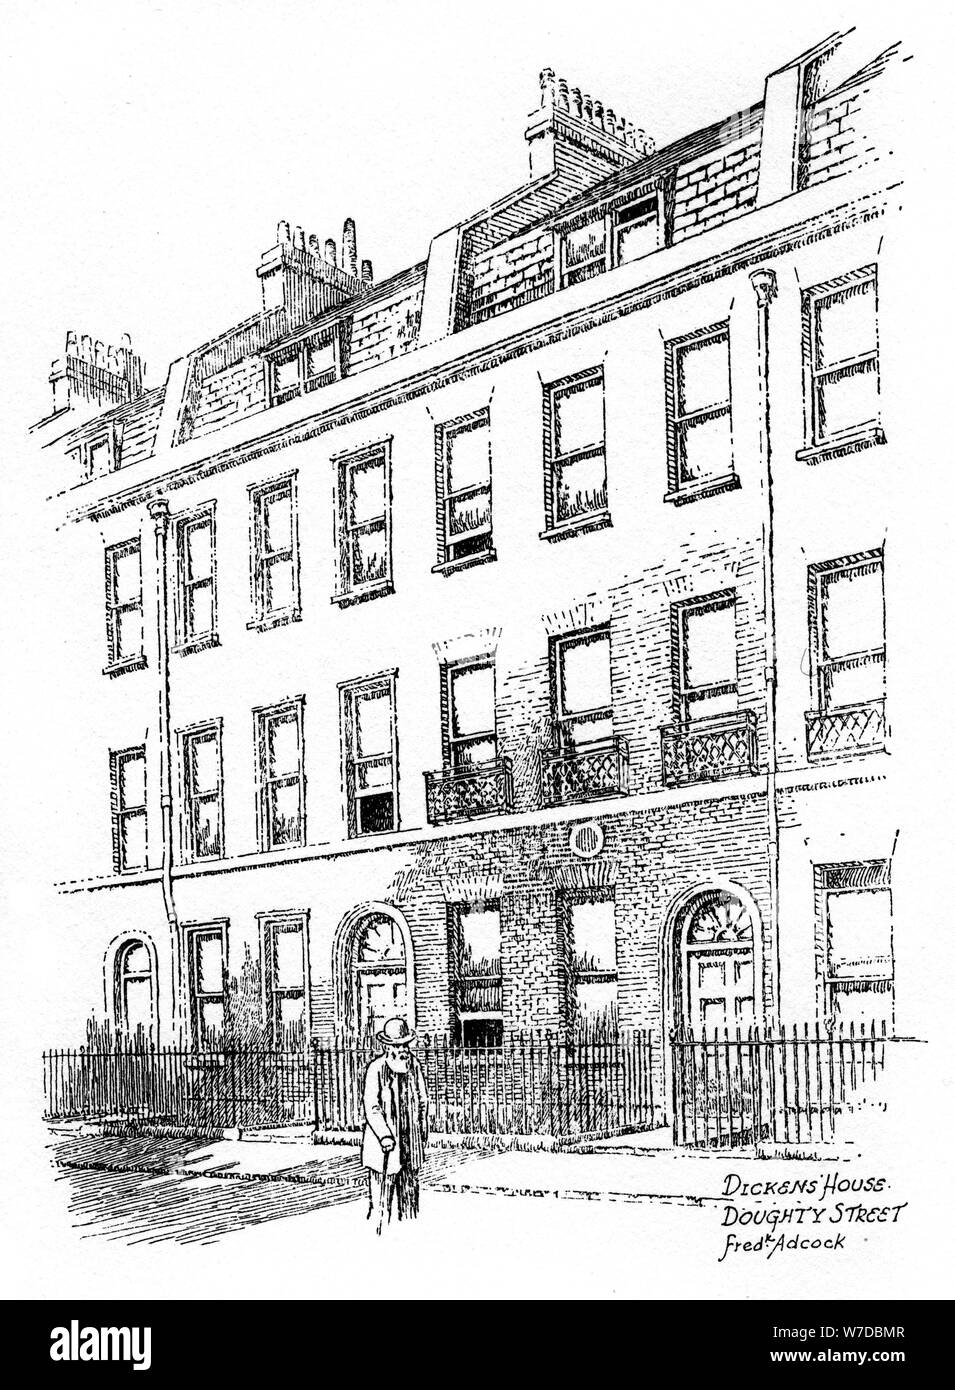 Dickens' House, 48 Doughty Street, Londra, 1912.Artista: Federico Adcock Foto Stock